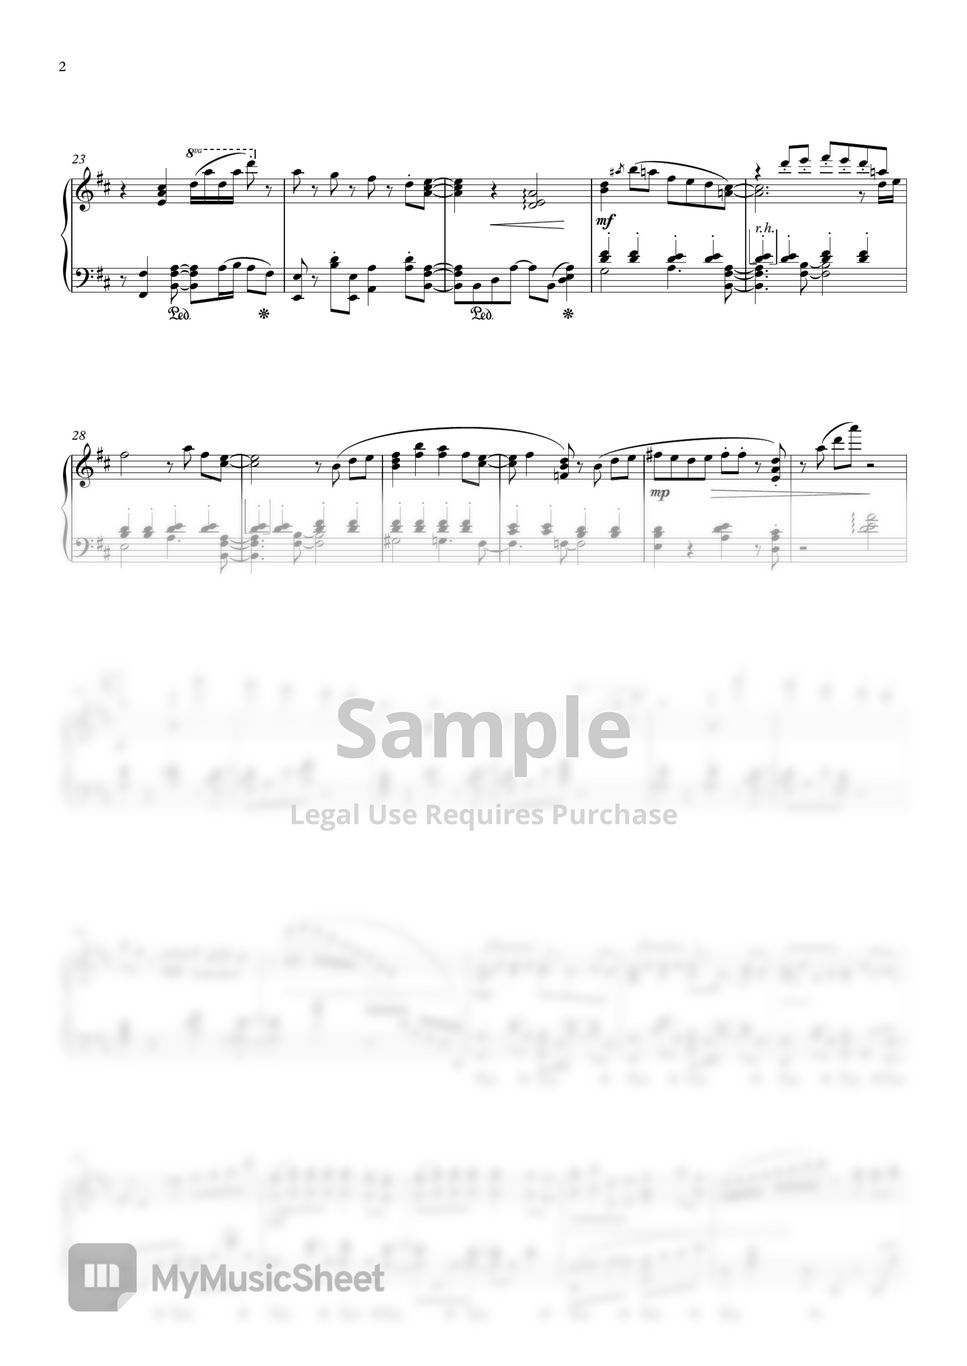 Blue Archive - 「カルバノグの兎」Theme 1 (钢琴版) by Singulfer-小言